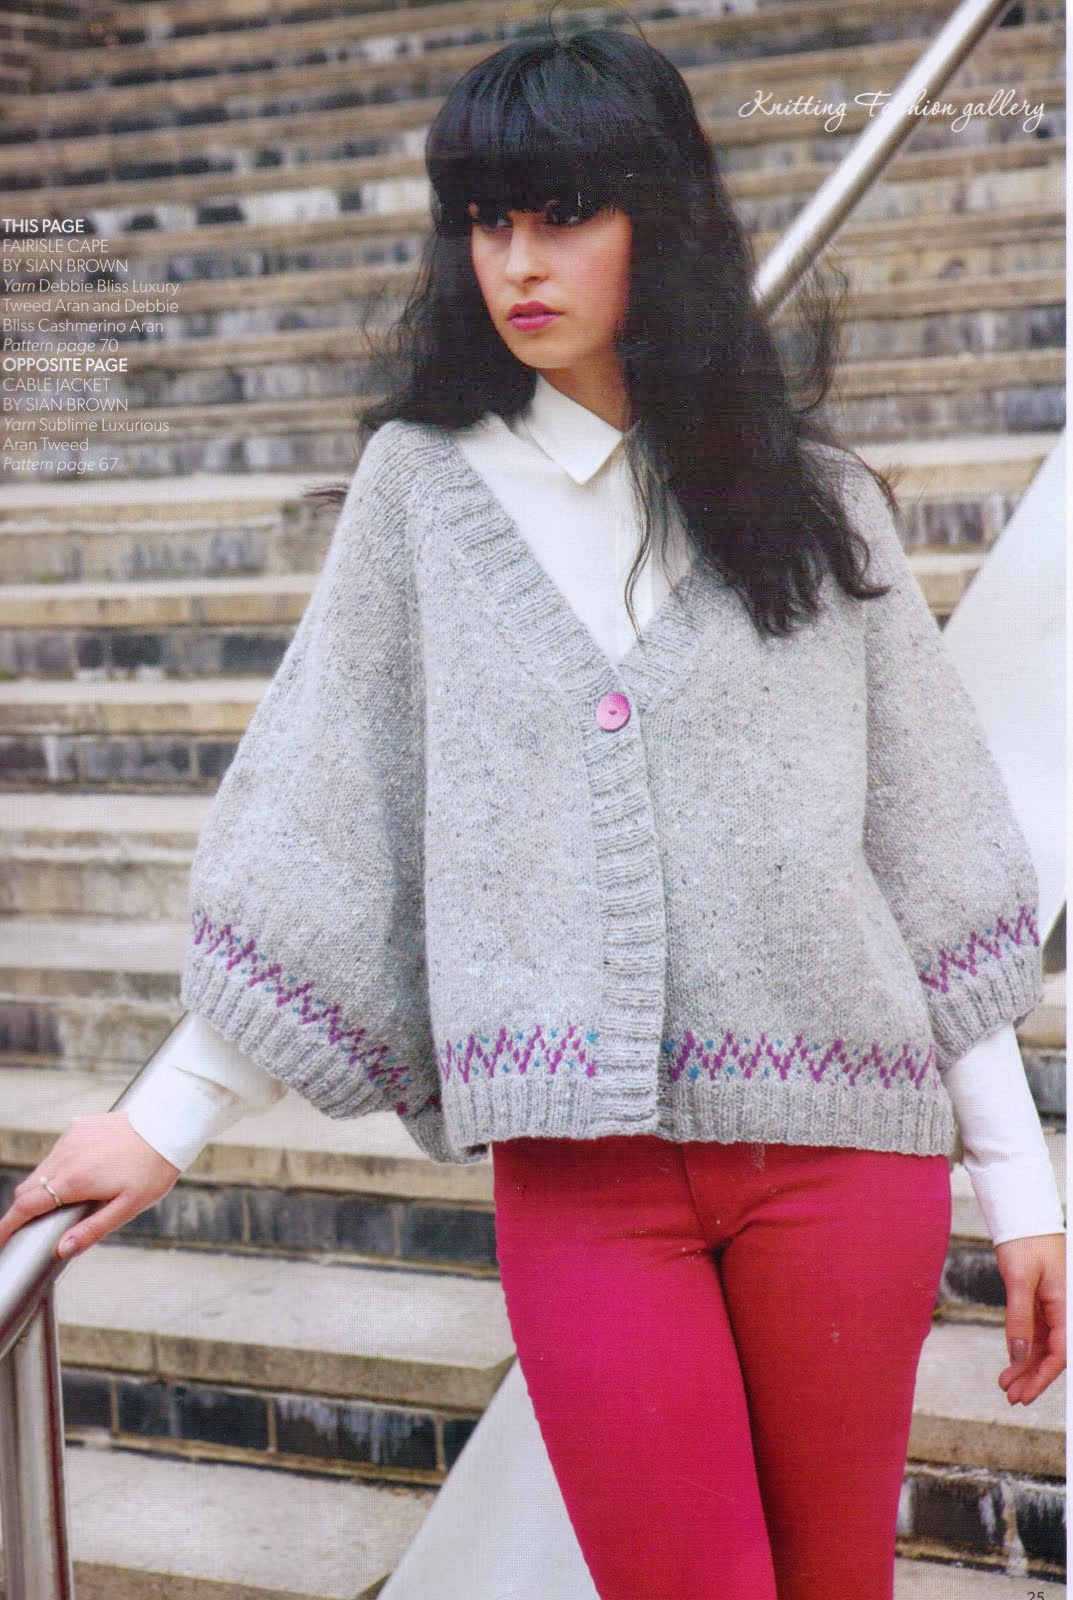 Latest Designs Knitting Magazine